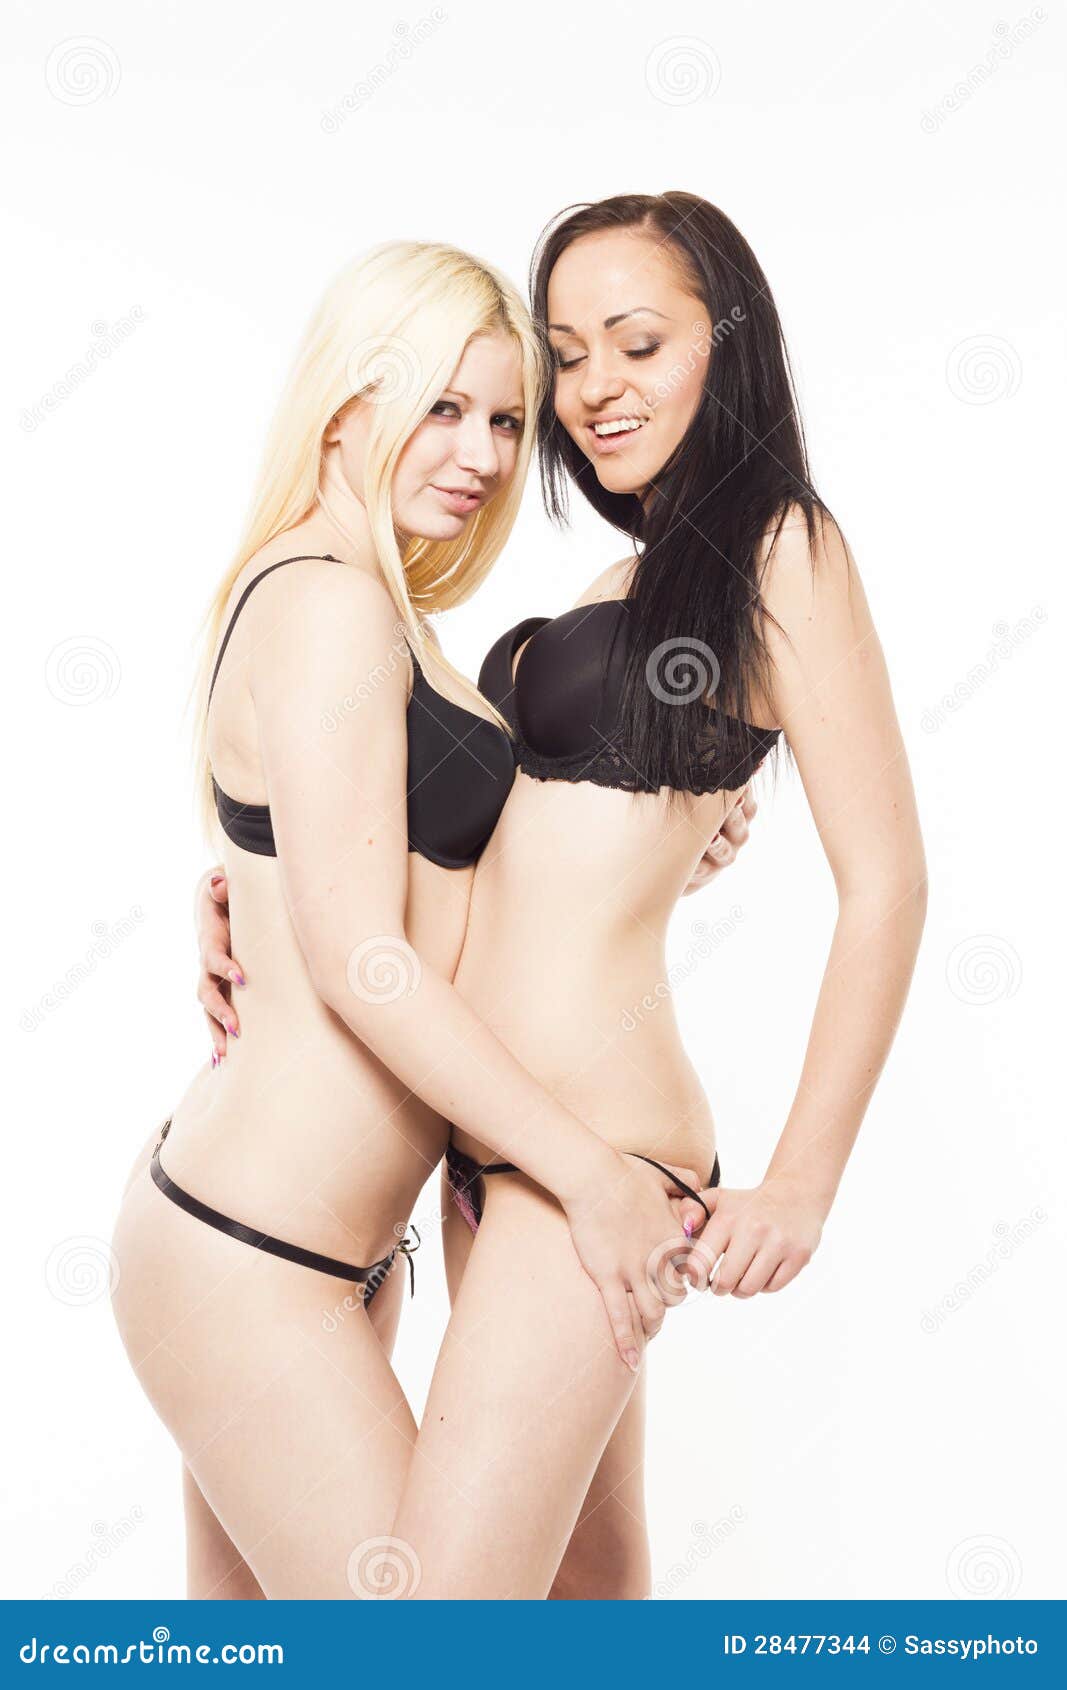 Hot Sexy Lesbians Kiss